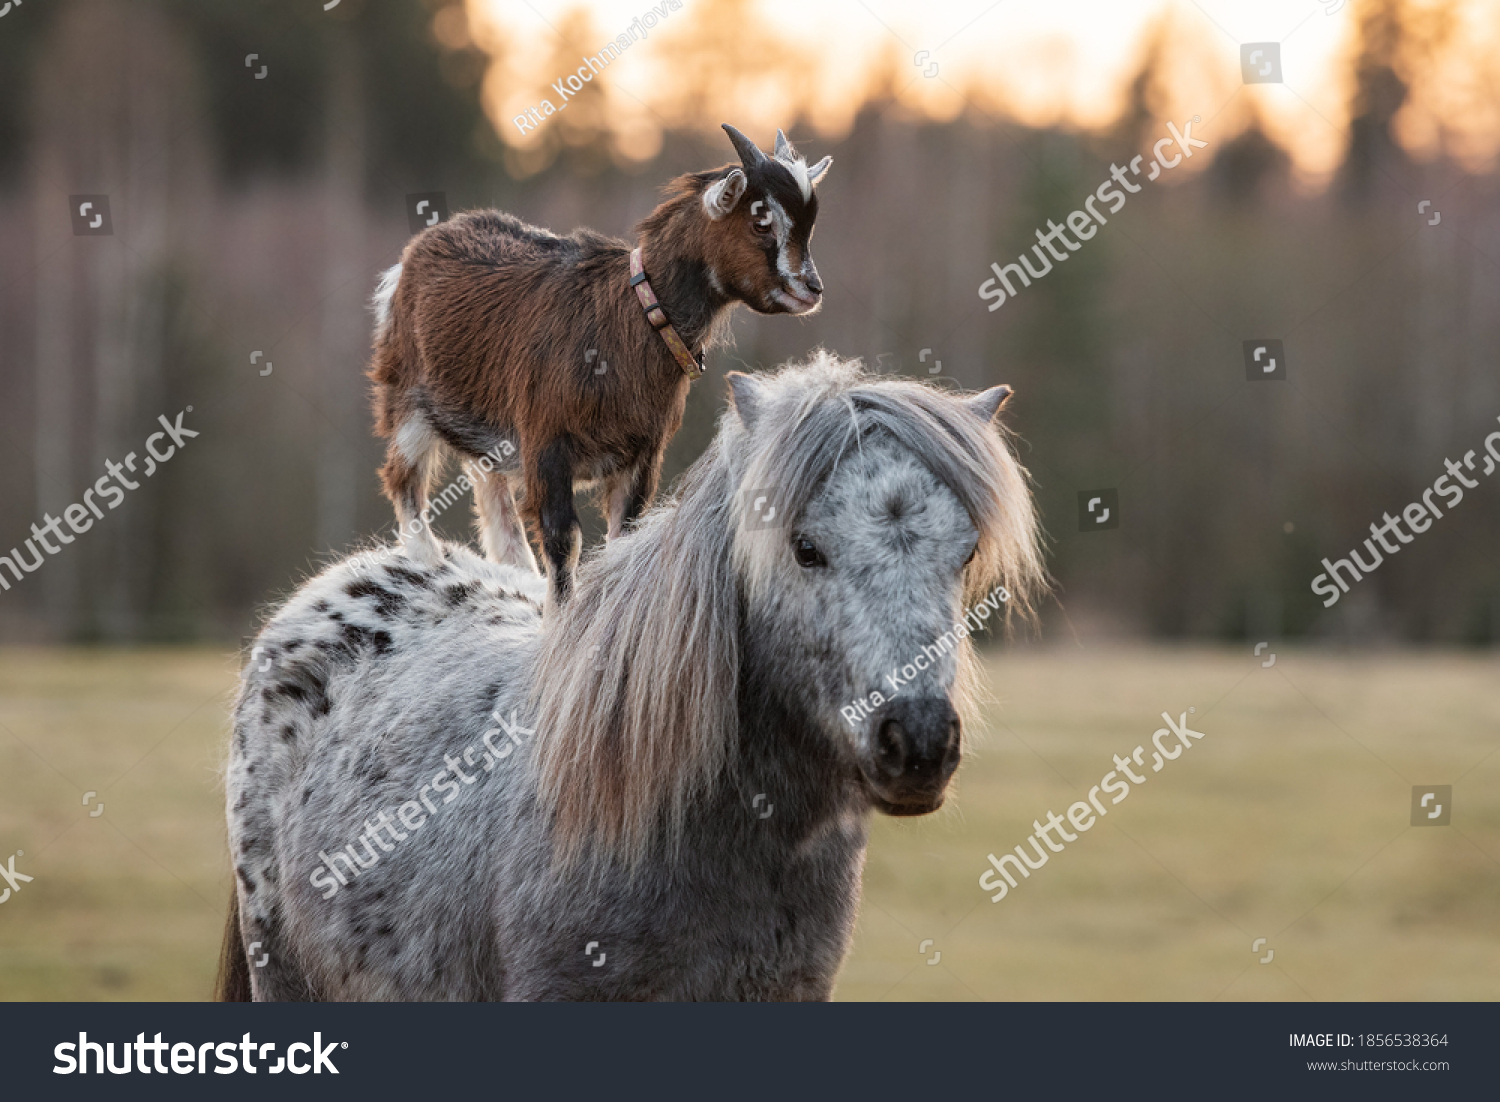 Little goat riding appaloosa pony. Friendship of pony and goat. Funny animals. #1856538364